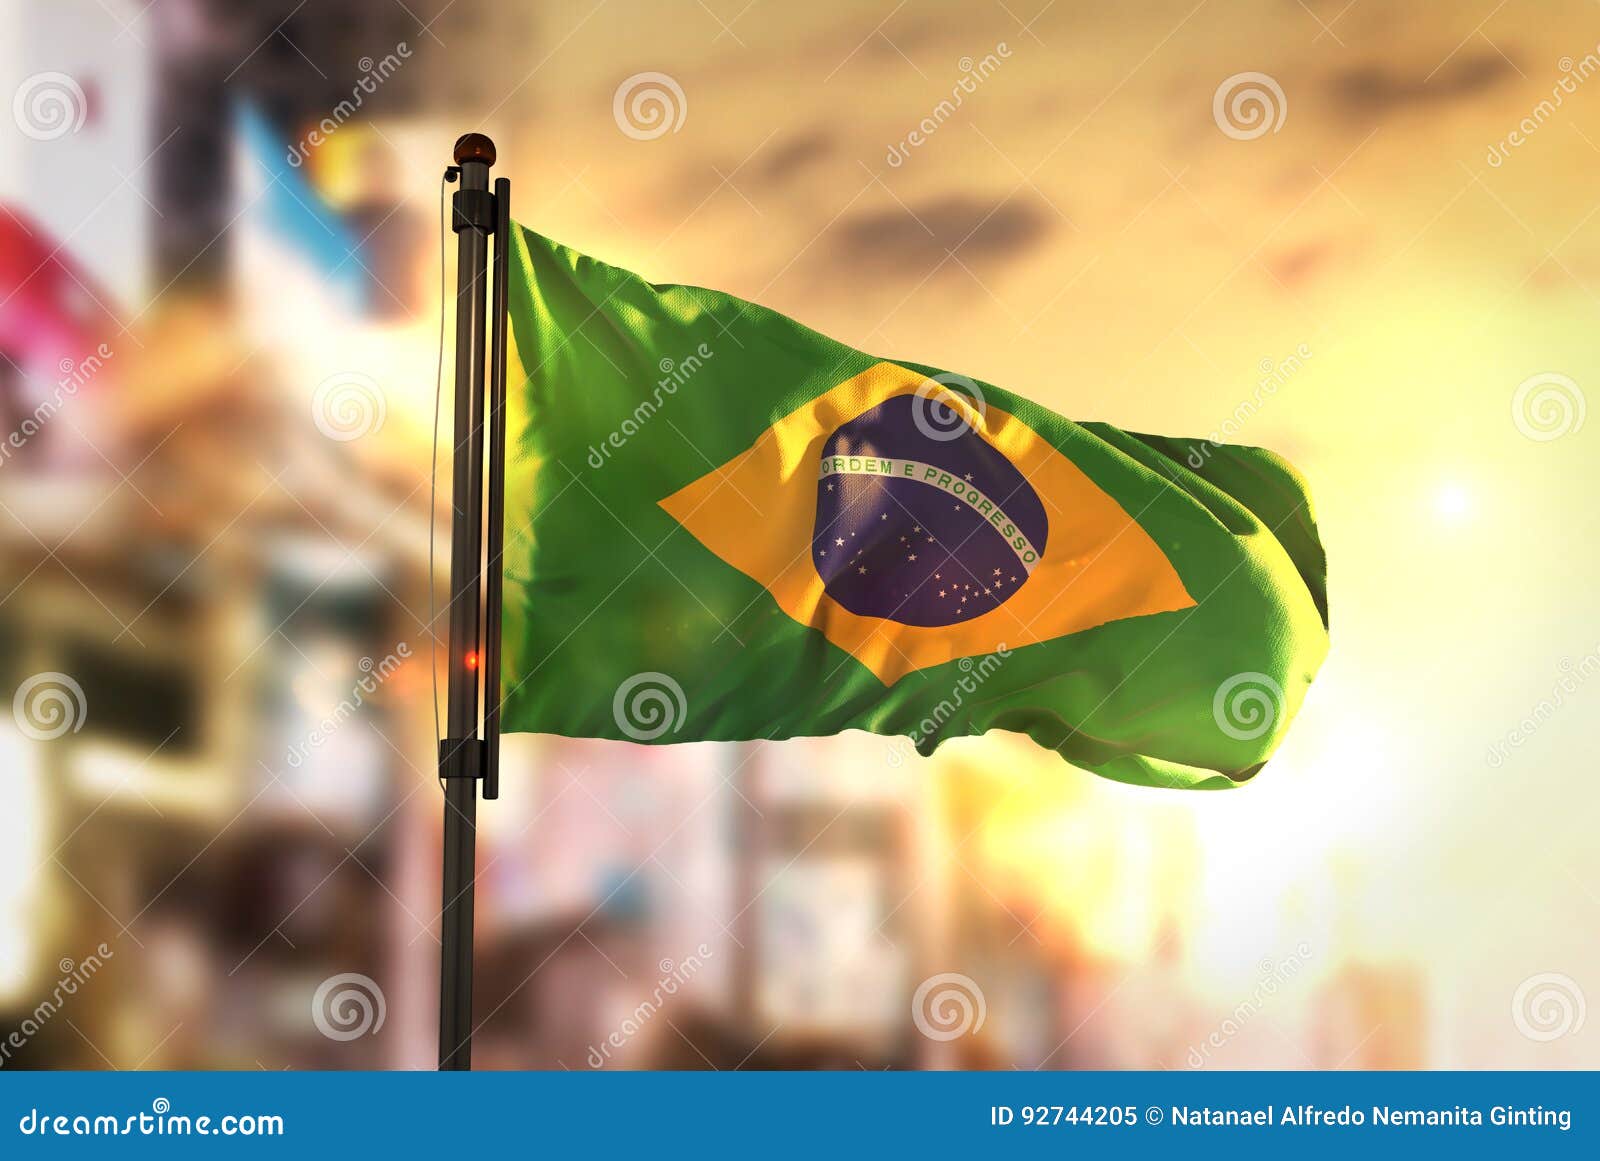 brazil flag against city blurred background at sunrise backlight